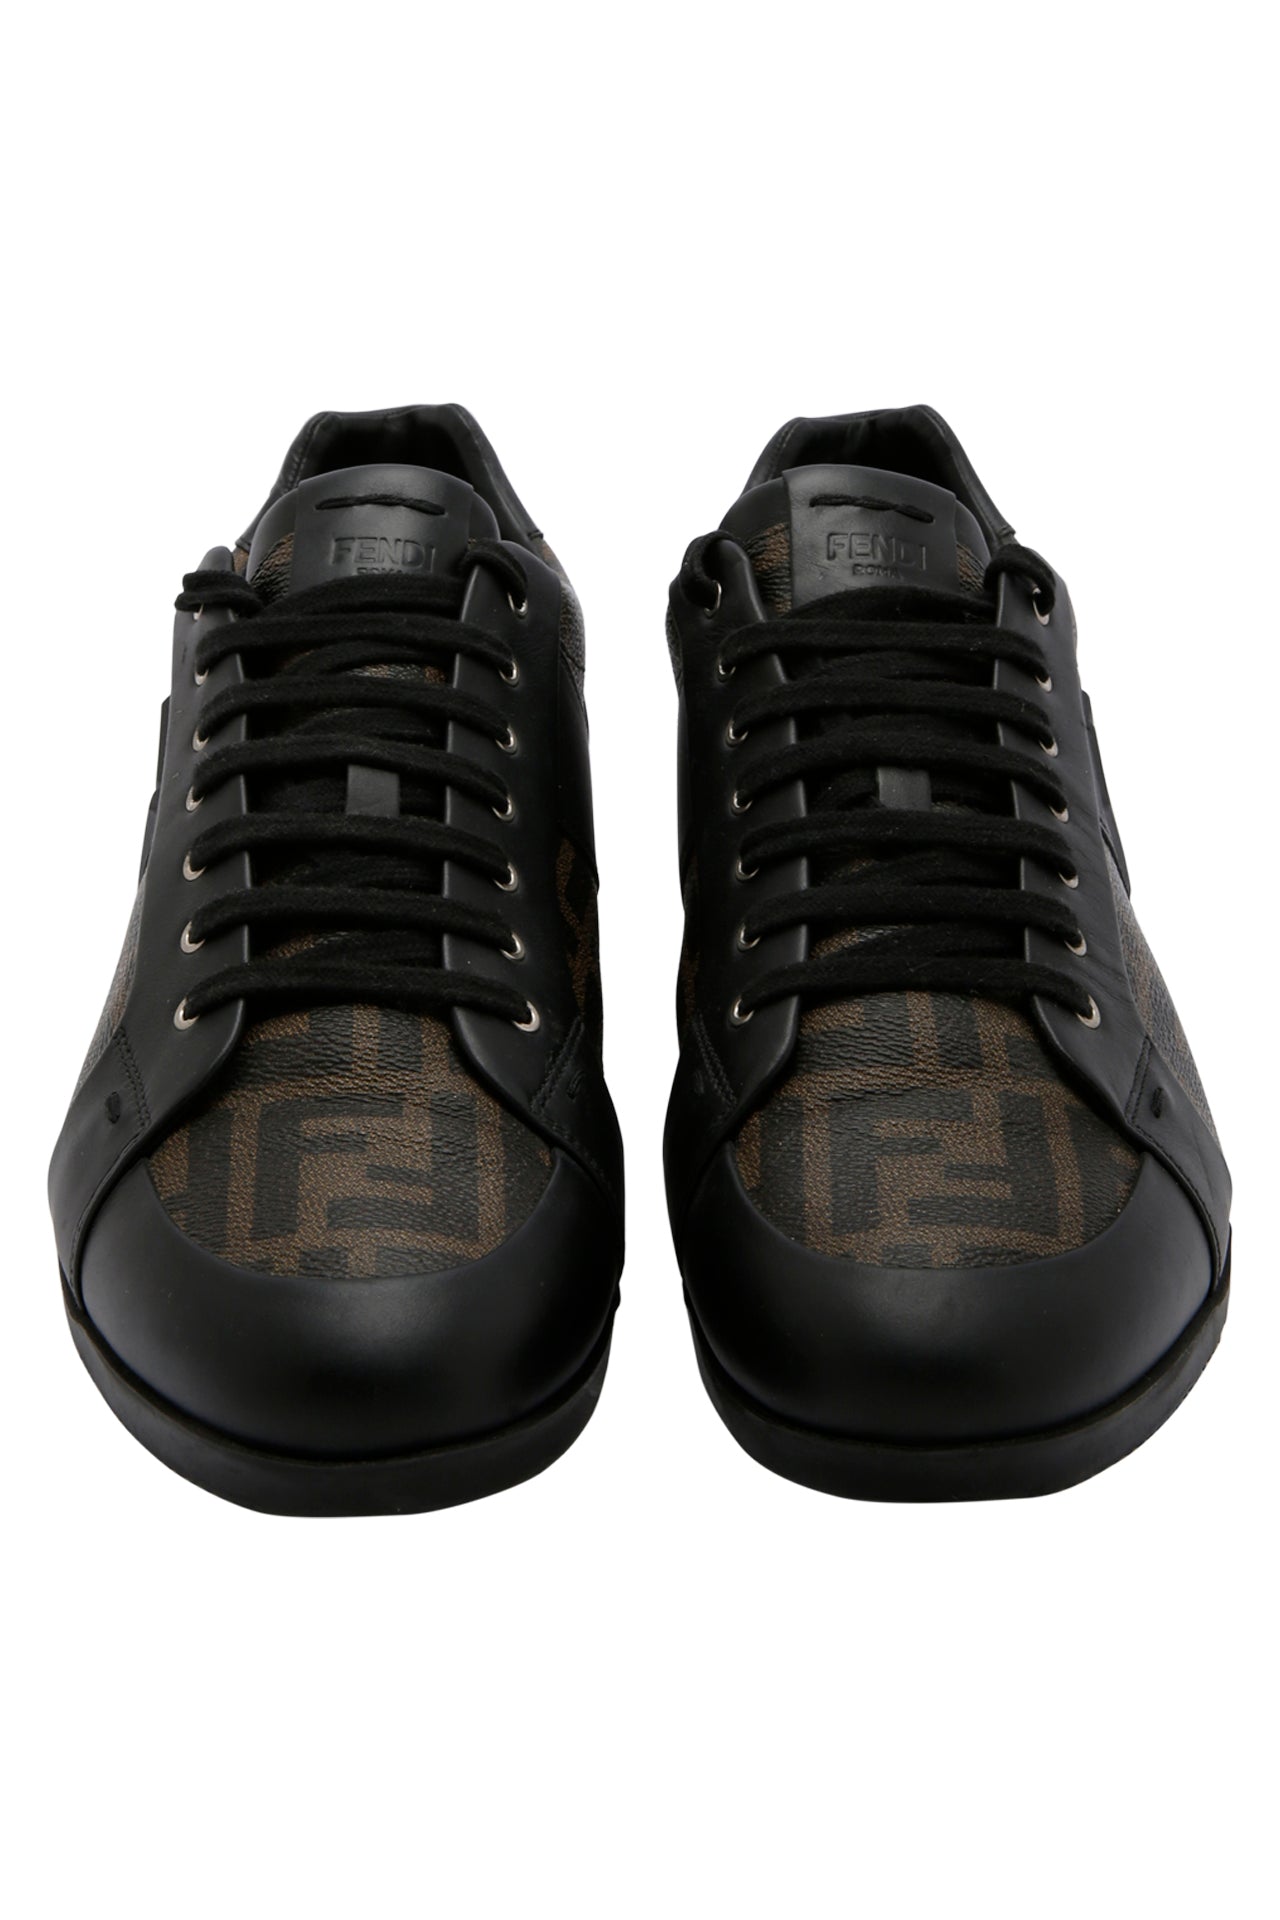 Fendi Zucca Logo Sneakers Size EU 46